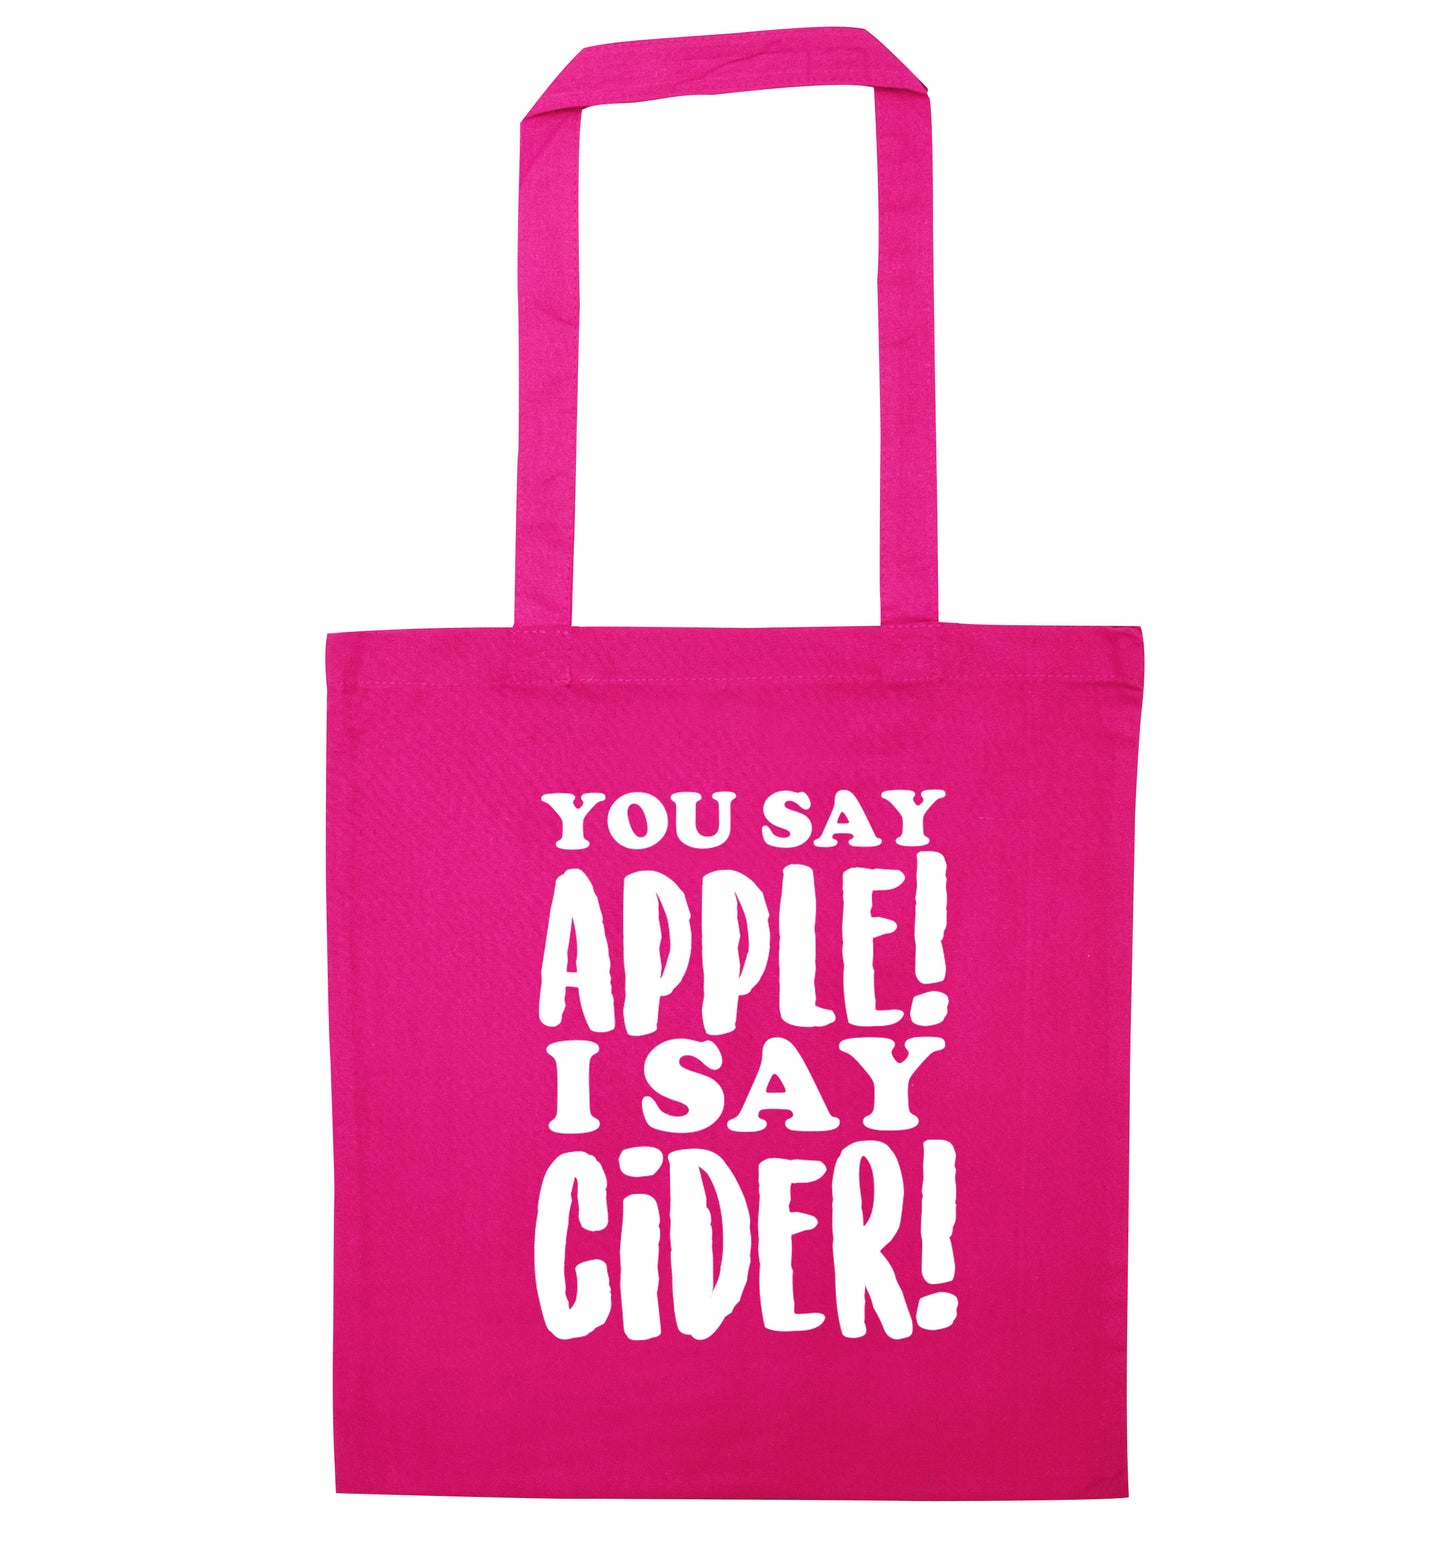 You say apple I say cider! pink tote bag